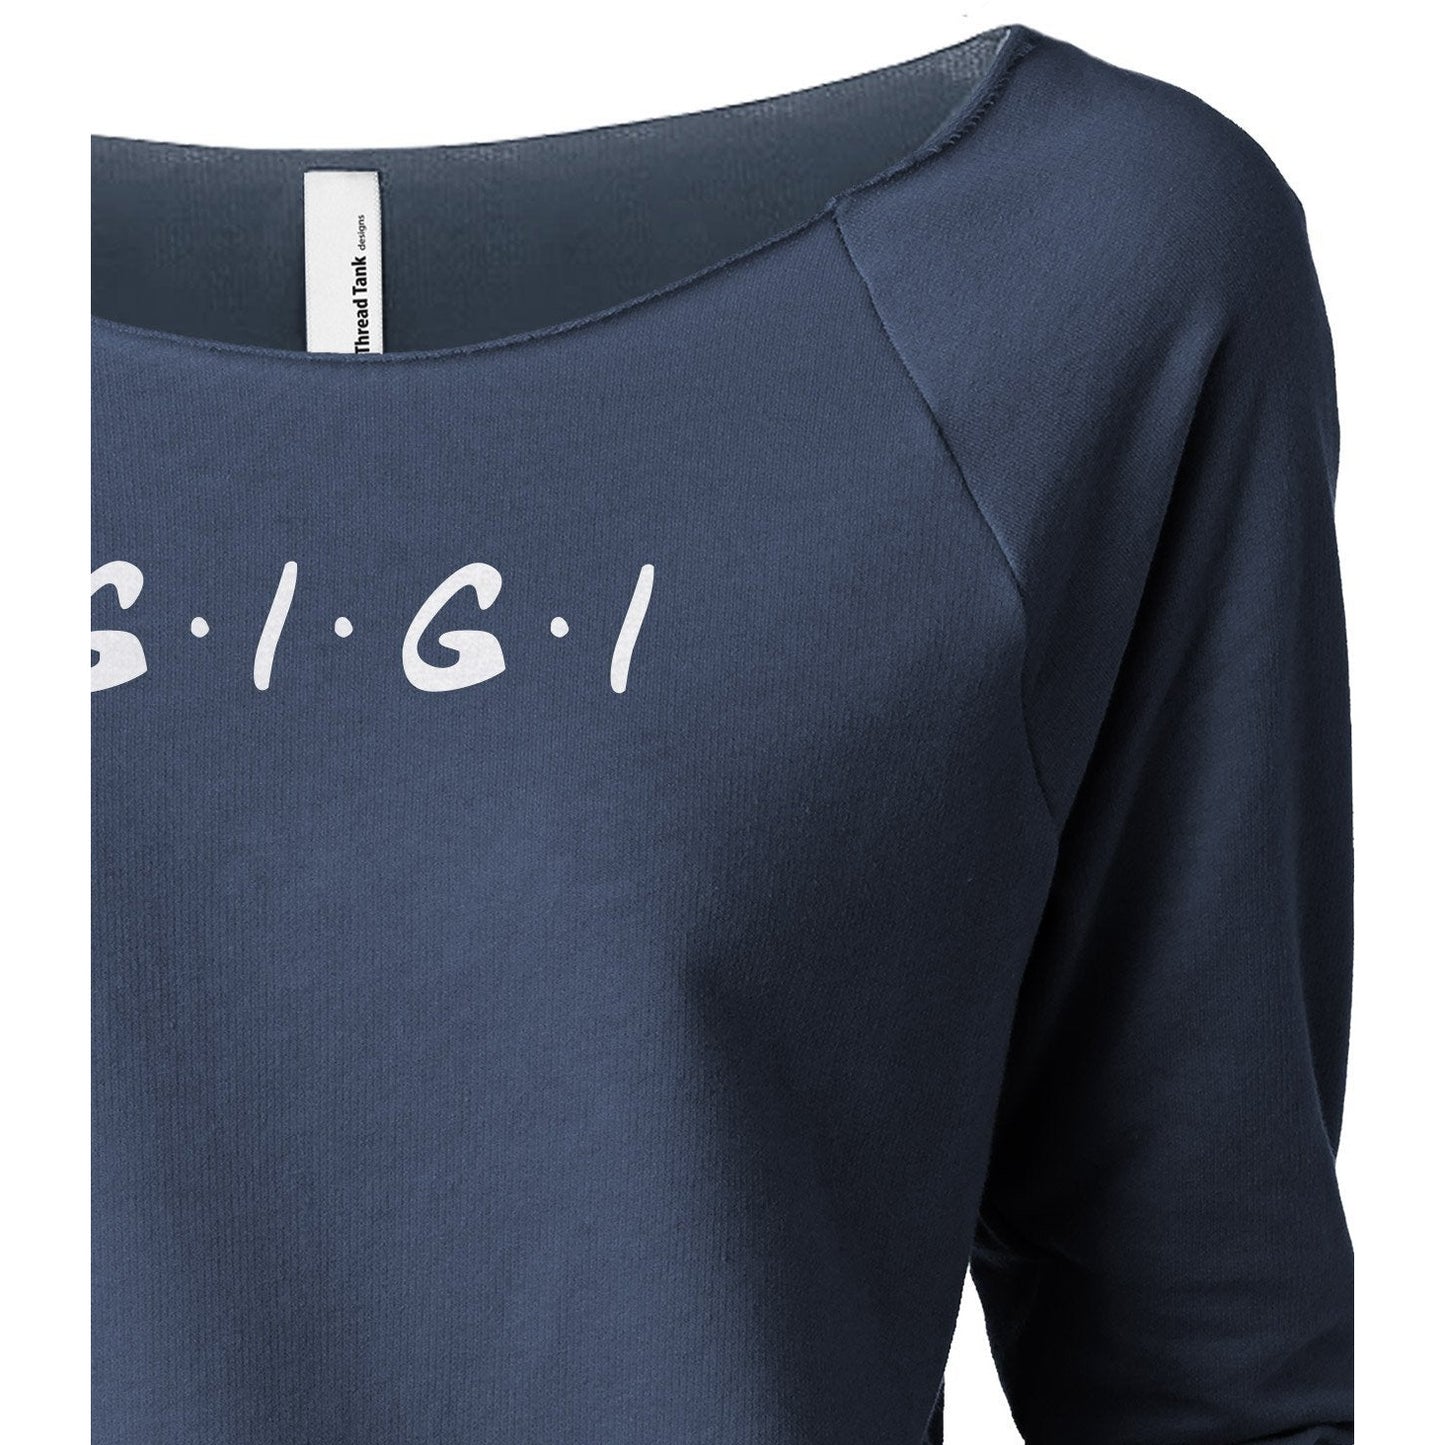 Gigi Friends Women's Graphic Printed Lightweight Slouchy 3/4 Sleeves Sweatshirt Navy Closeup